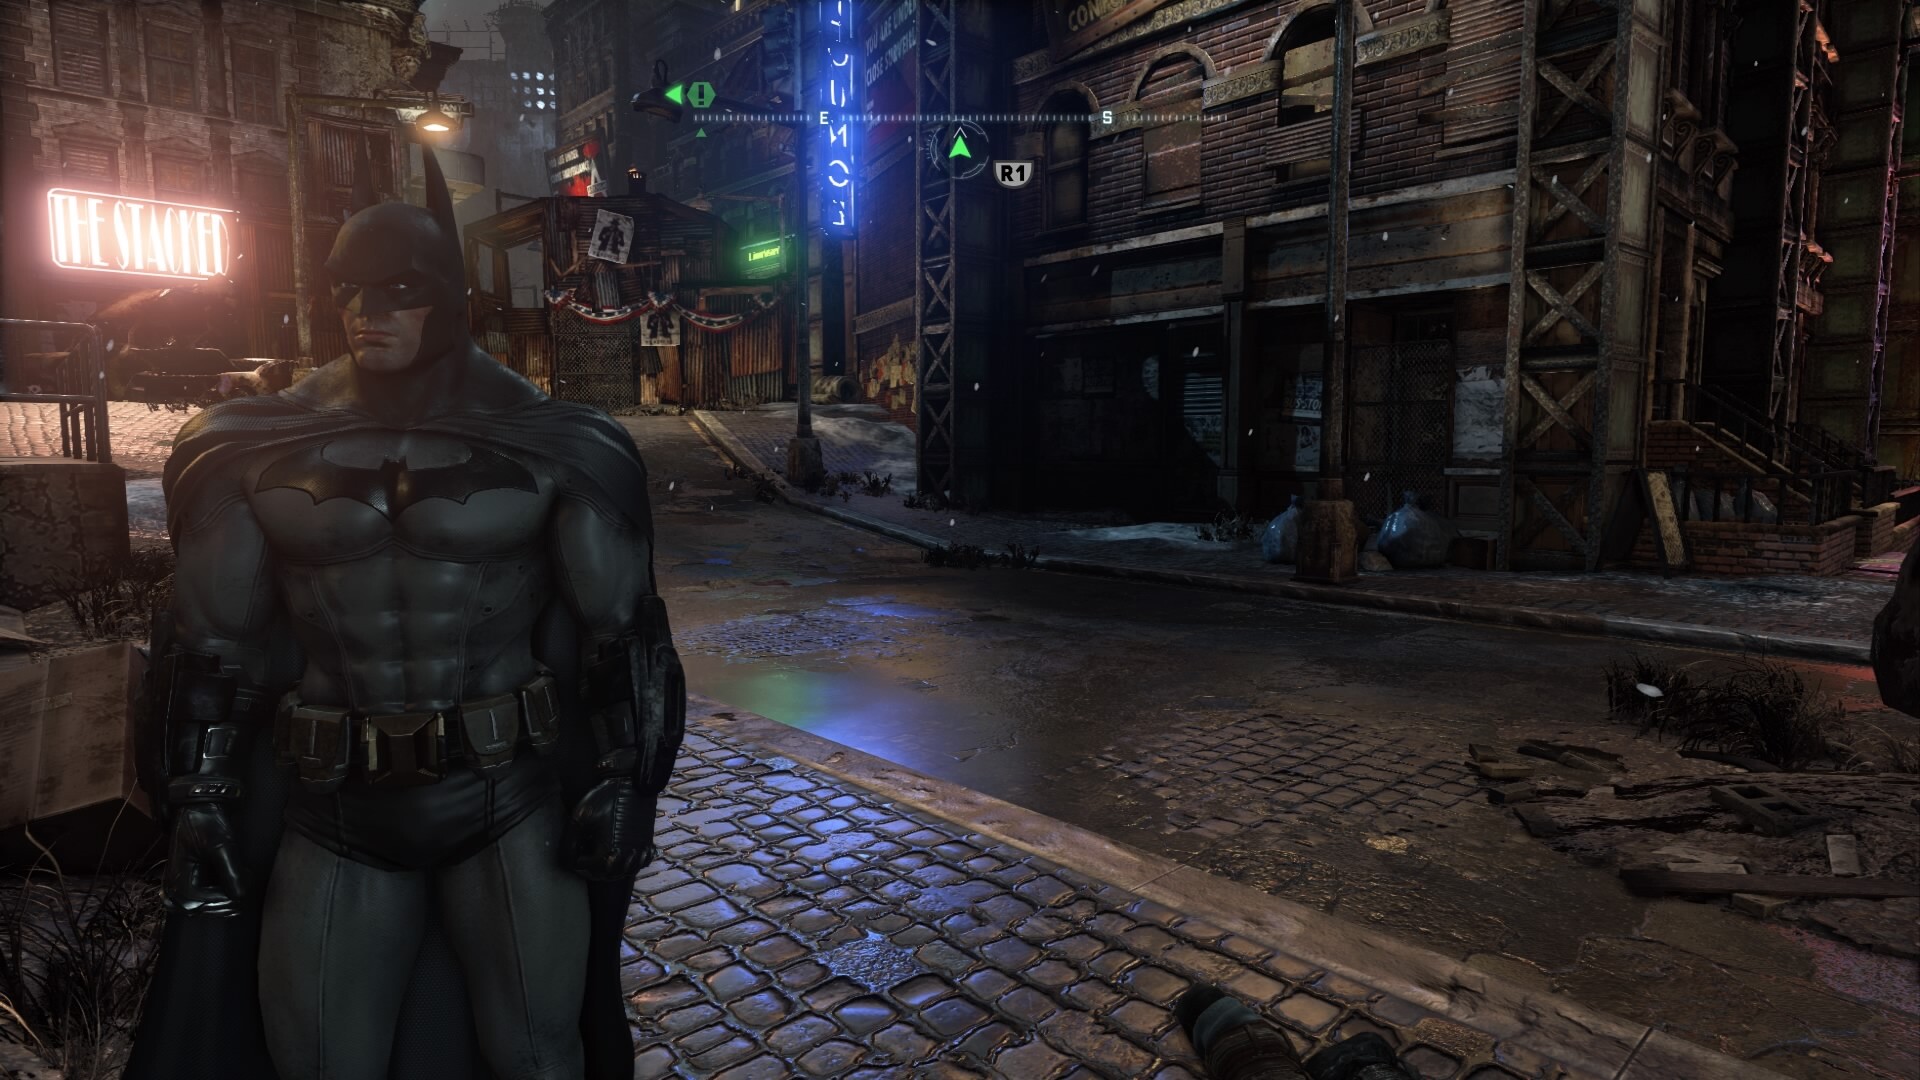 Batman Return to Arkham - Arkham Asylum